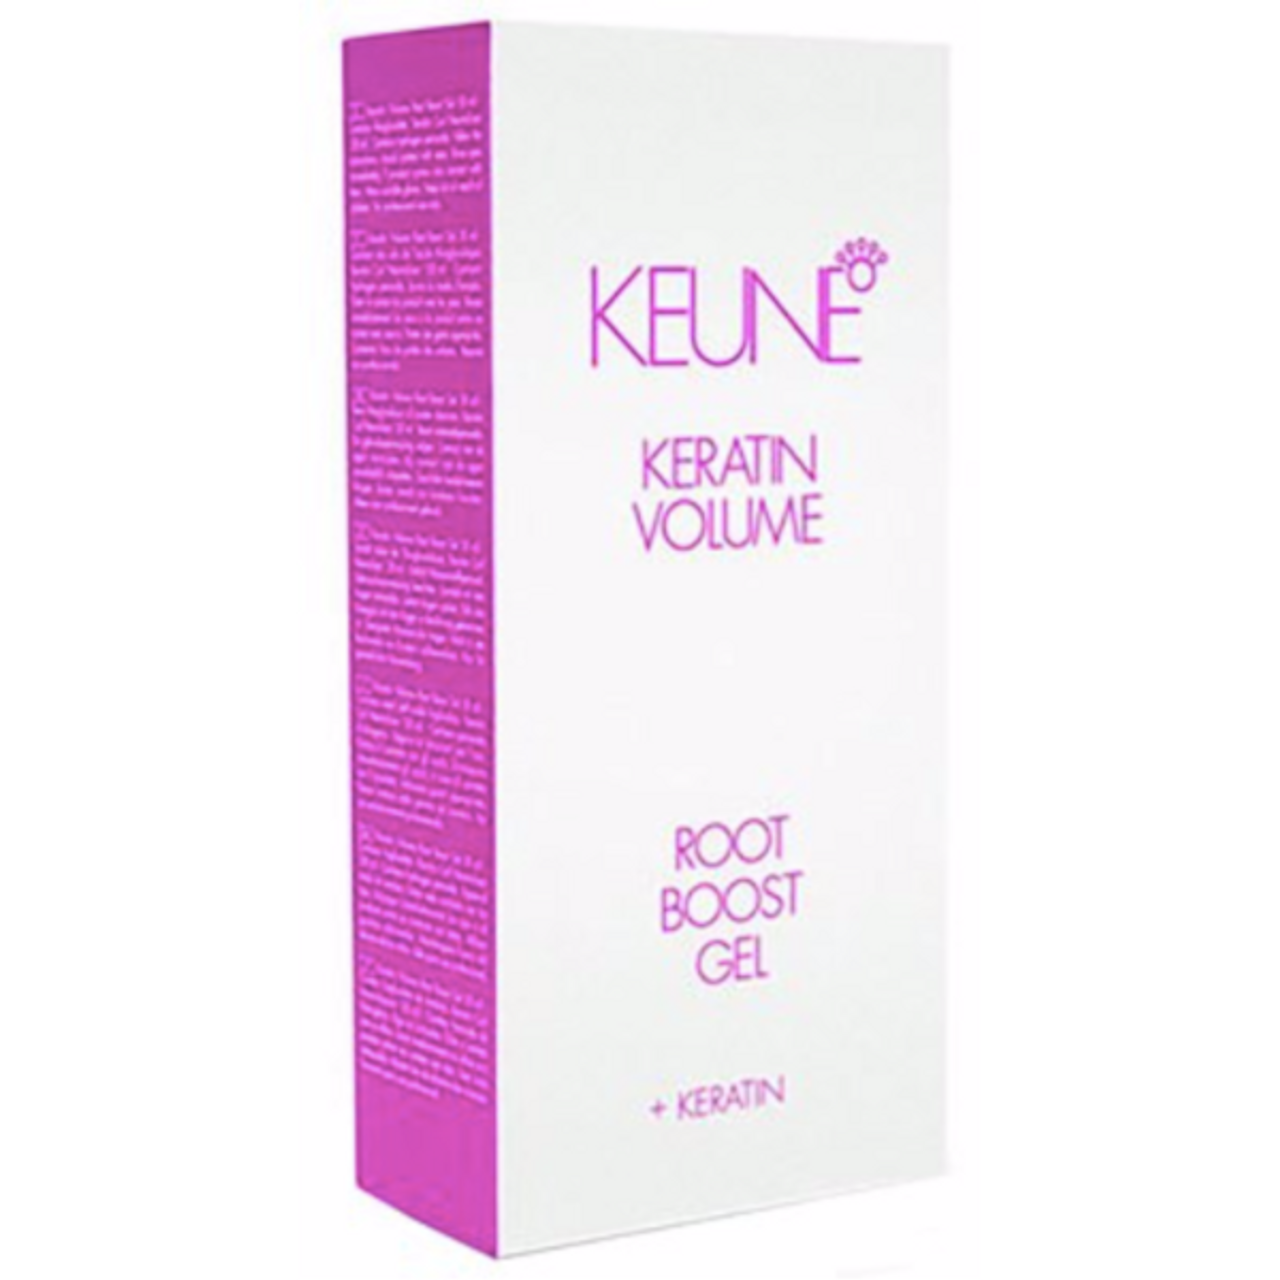 Keune Keratin Curl Volume Root Boost Gel - 1.7 oz